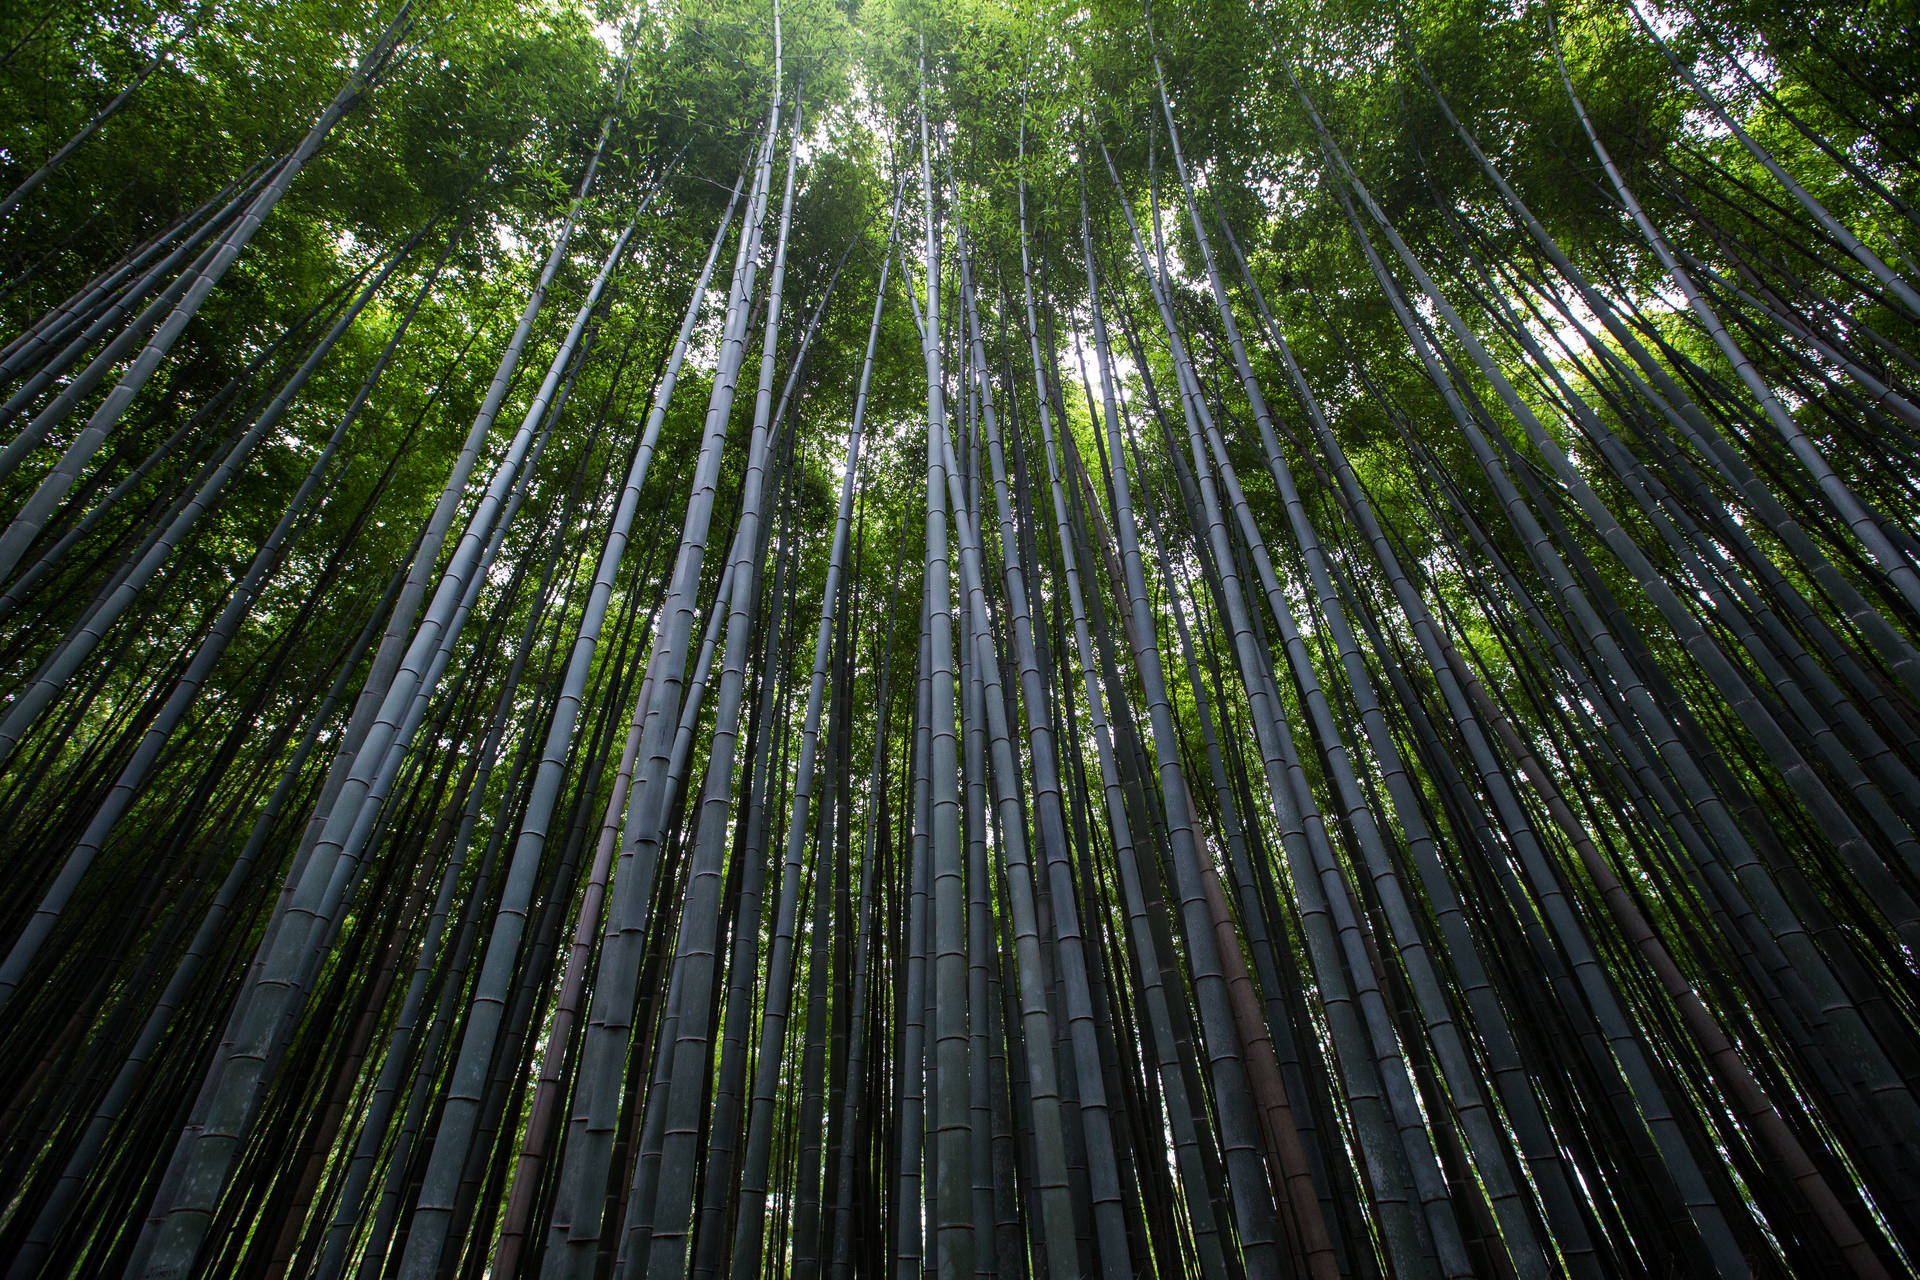 Extensive Bamboo Plants